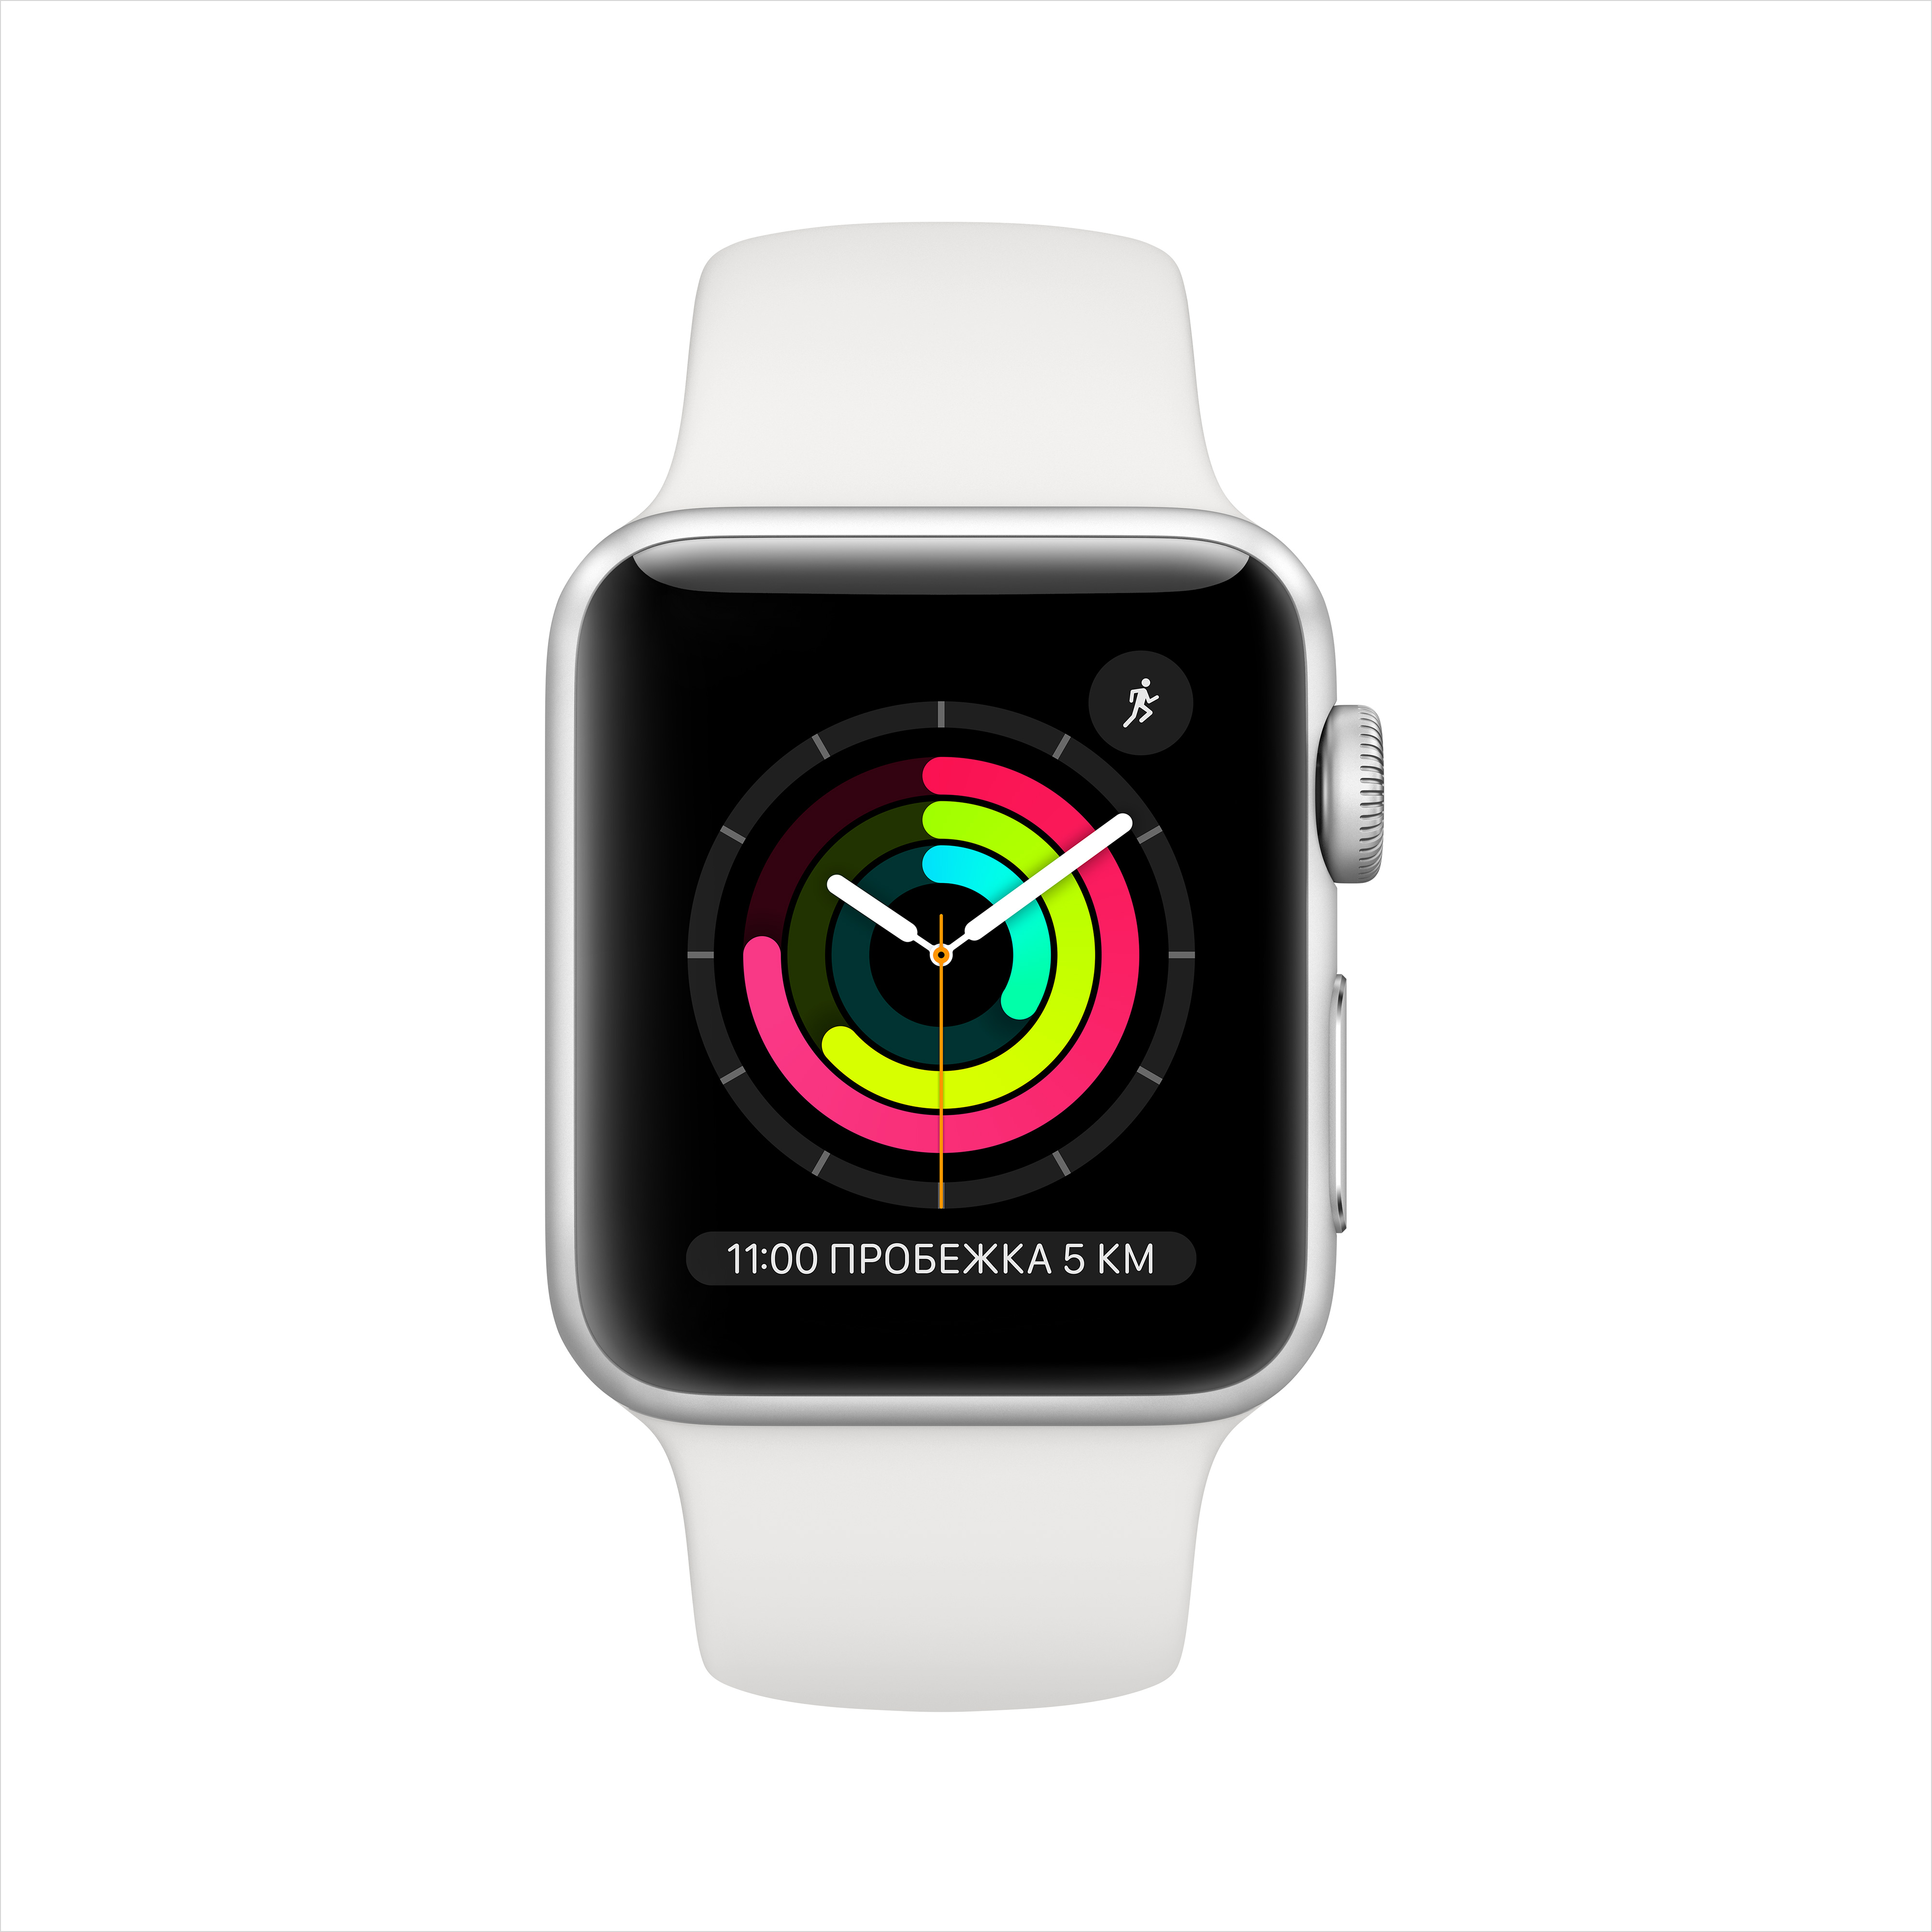 Оригинал часы apple watch. Apple watch Series 3 38mm. Apple watch Series 3 42 мм. Apple watch 3 38 mm Silver. Часы эпл вотч 7.